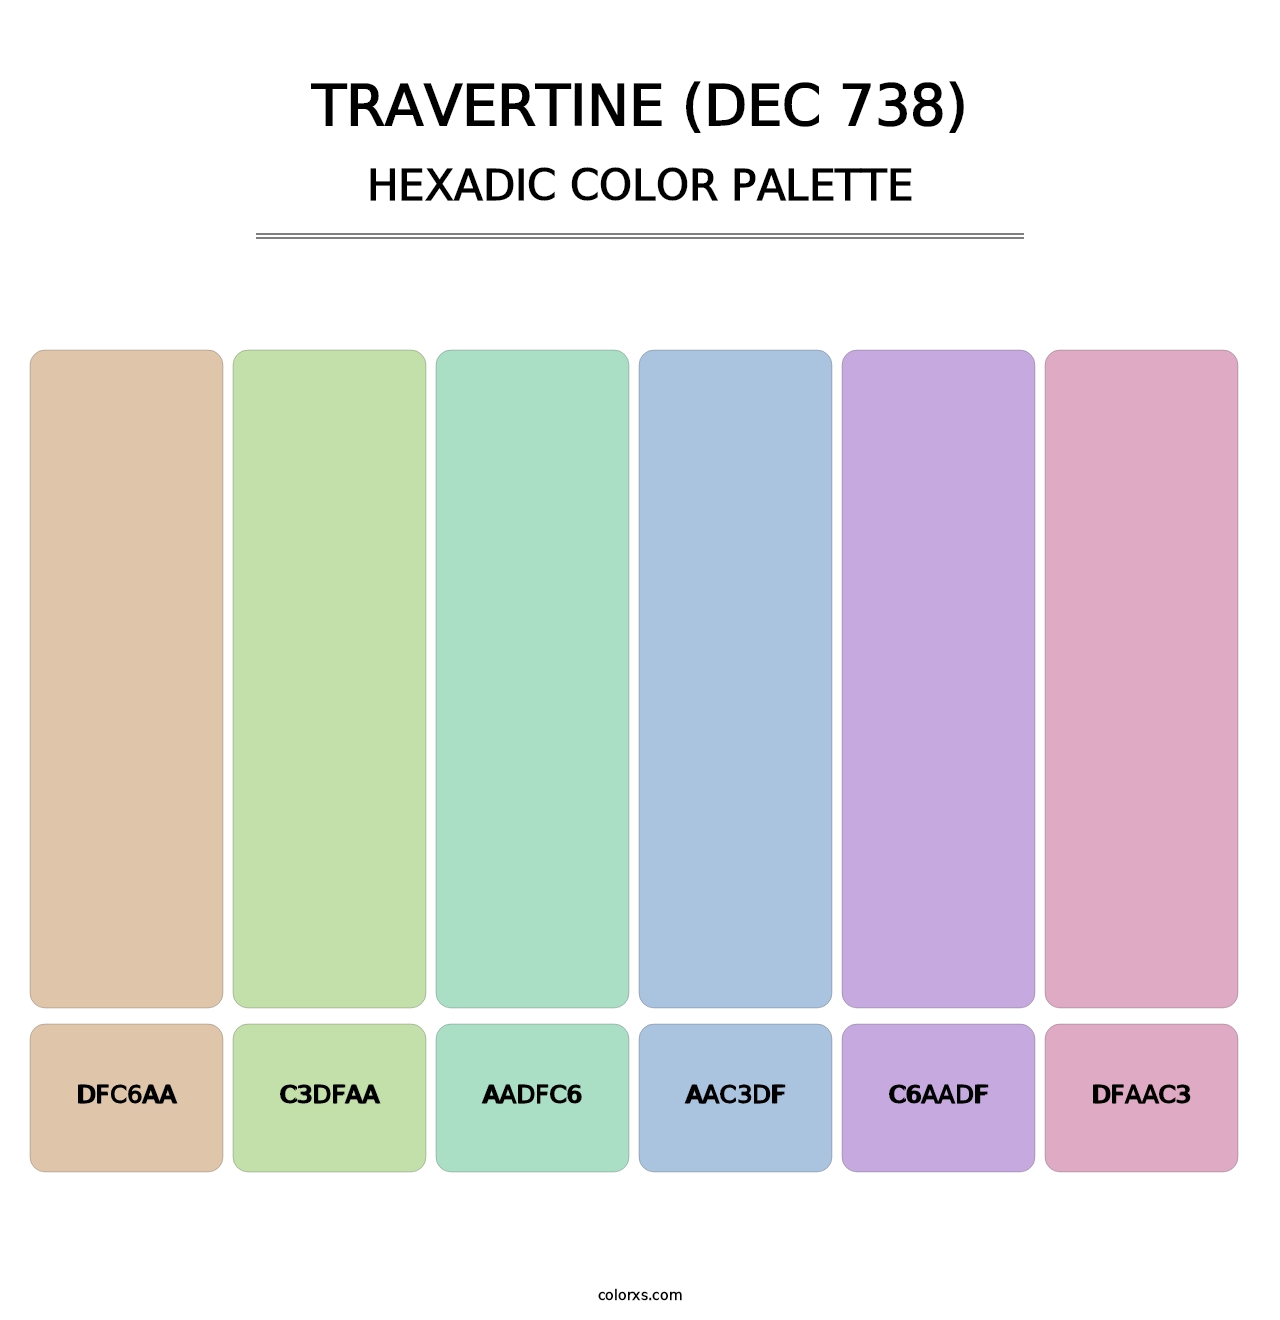 Travertine (DEC 738) - Hexadic Color Palette